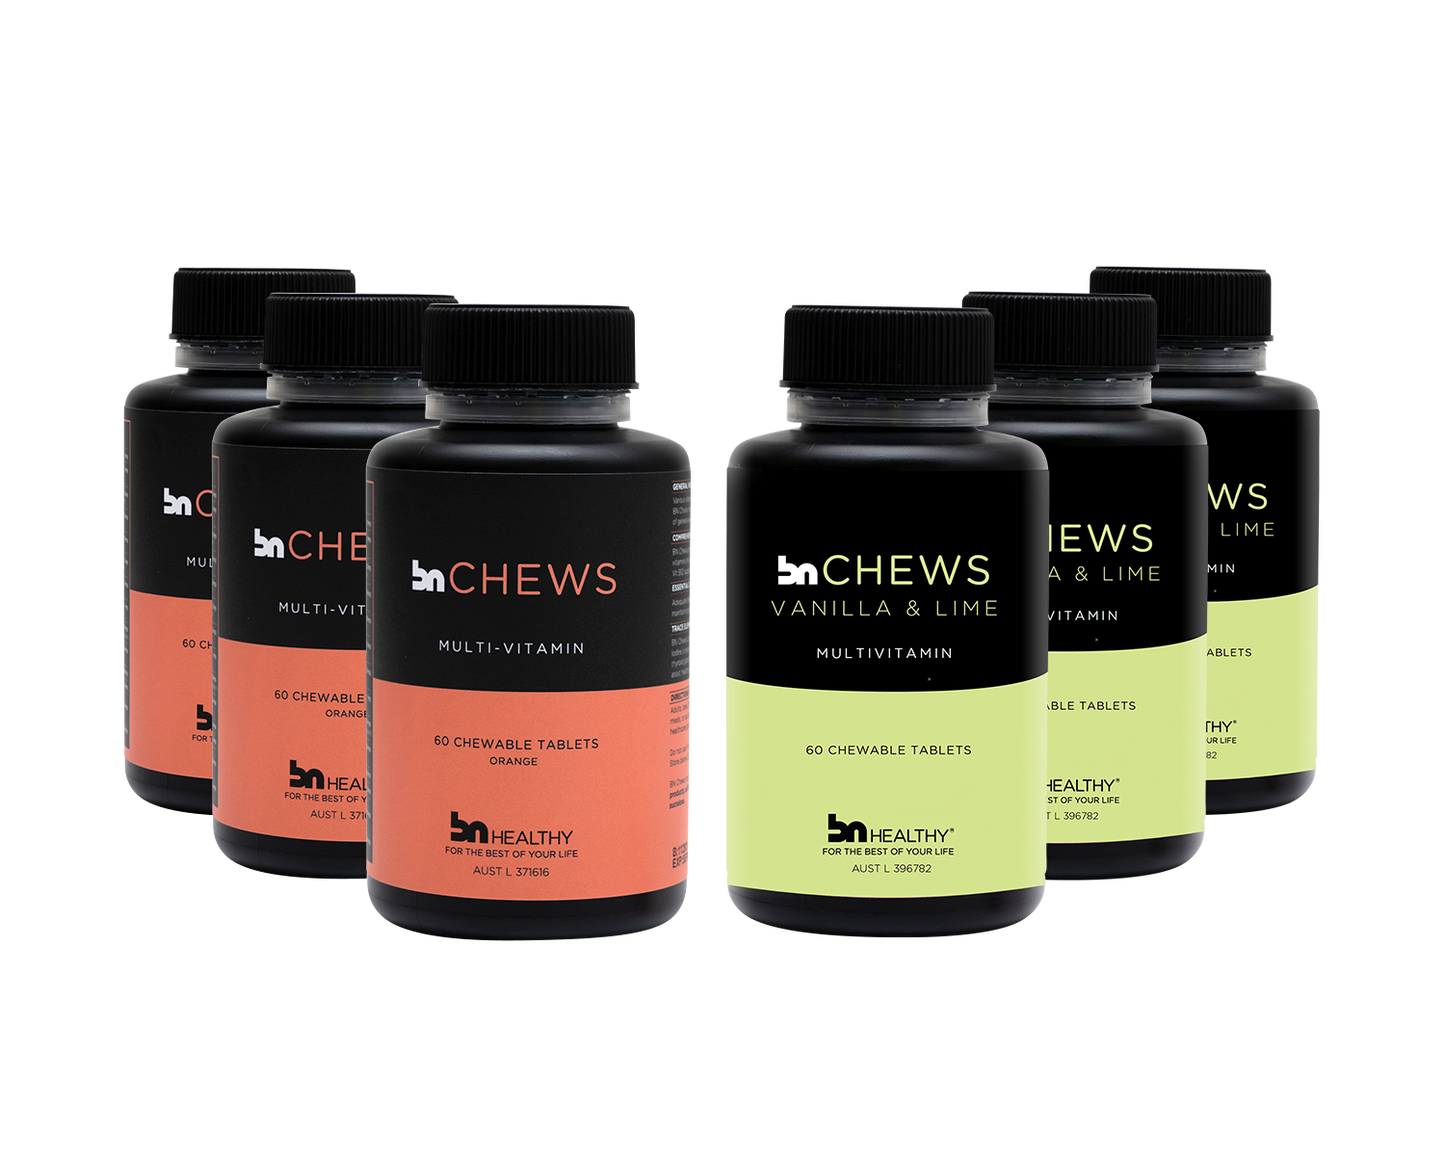 BN Chews Orange & BN Chews Vanilla Lime - 6 Month Subscription - Save 25%